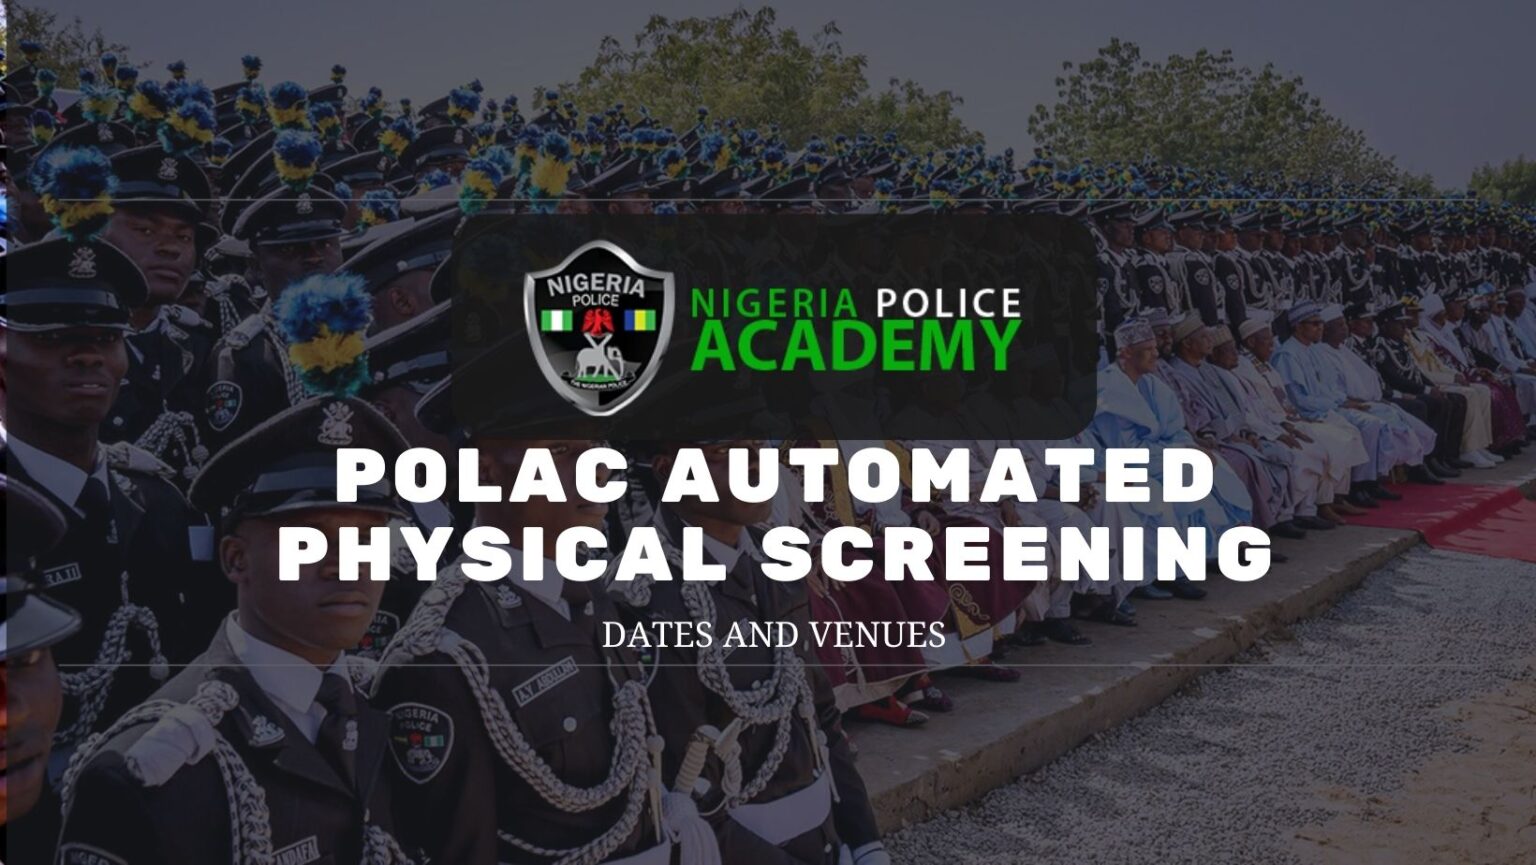 nigeria-police-academy-wudil-polac-www-polac-edu-ng-ngscholars